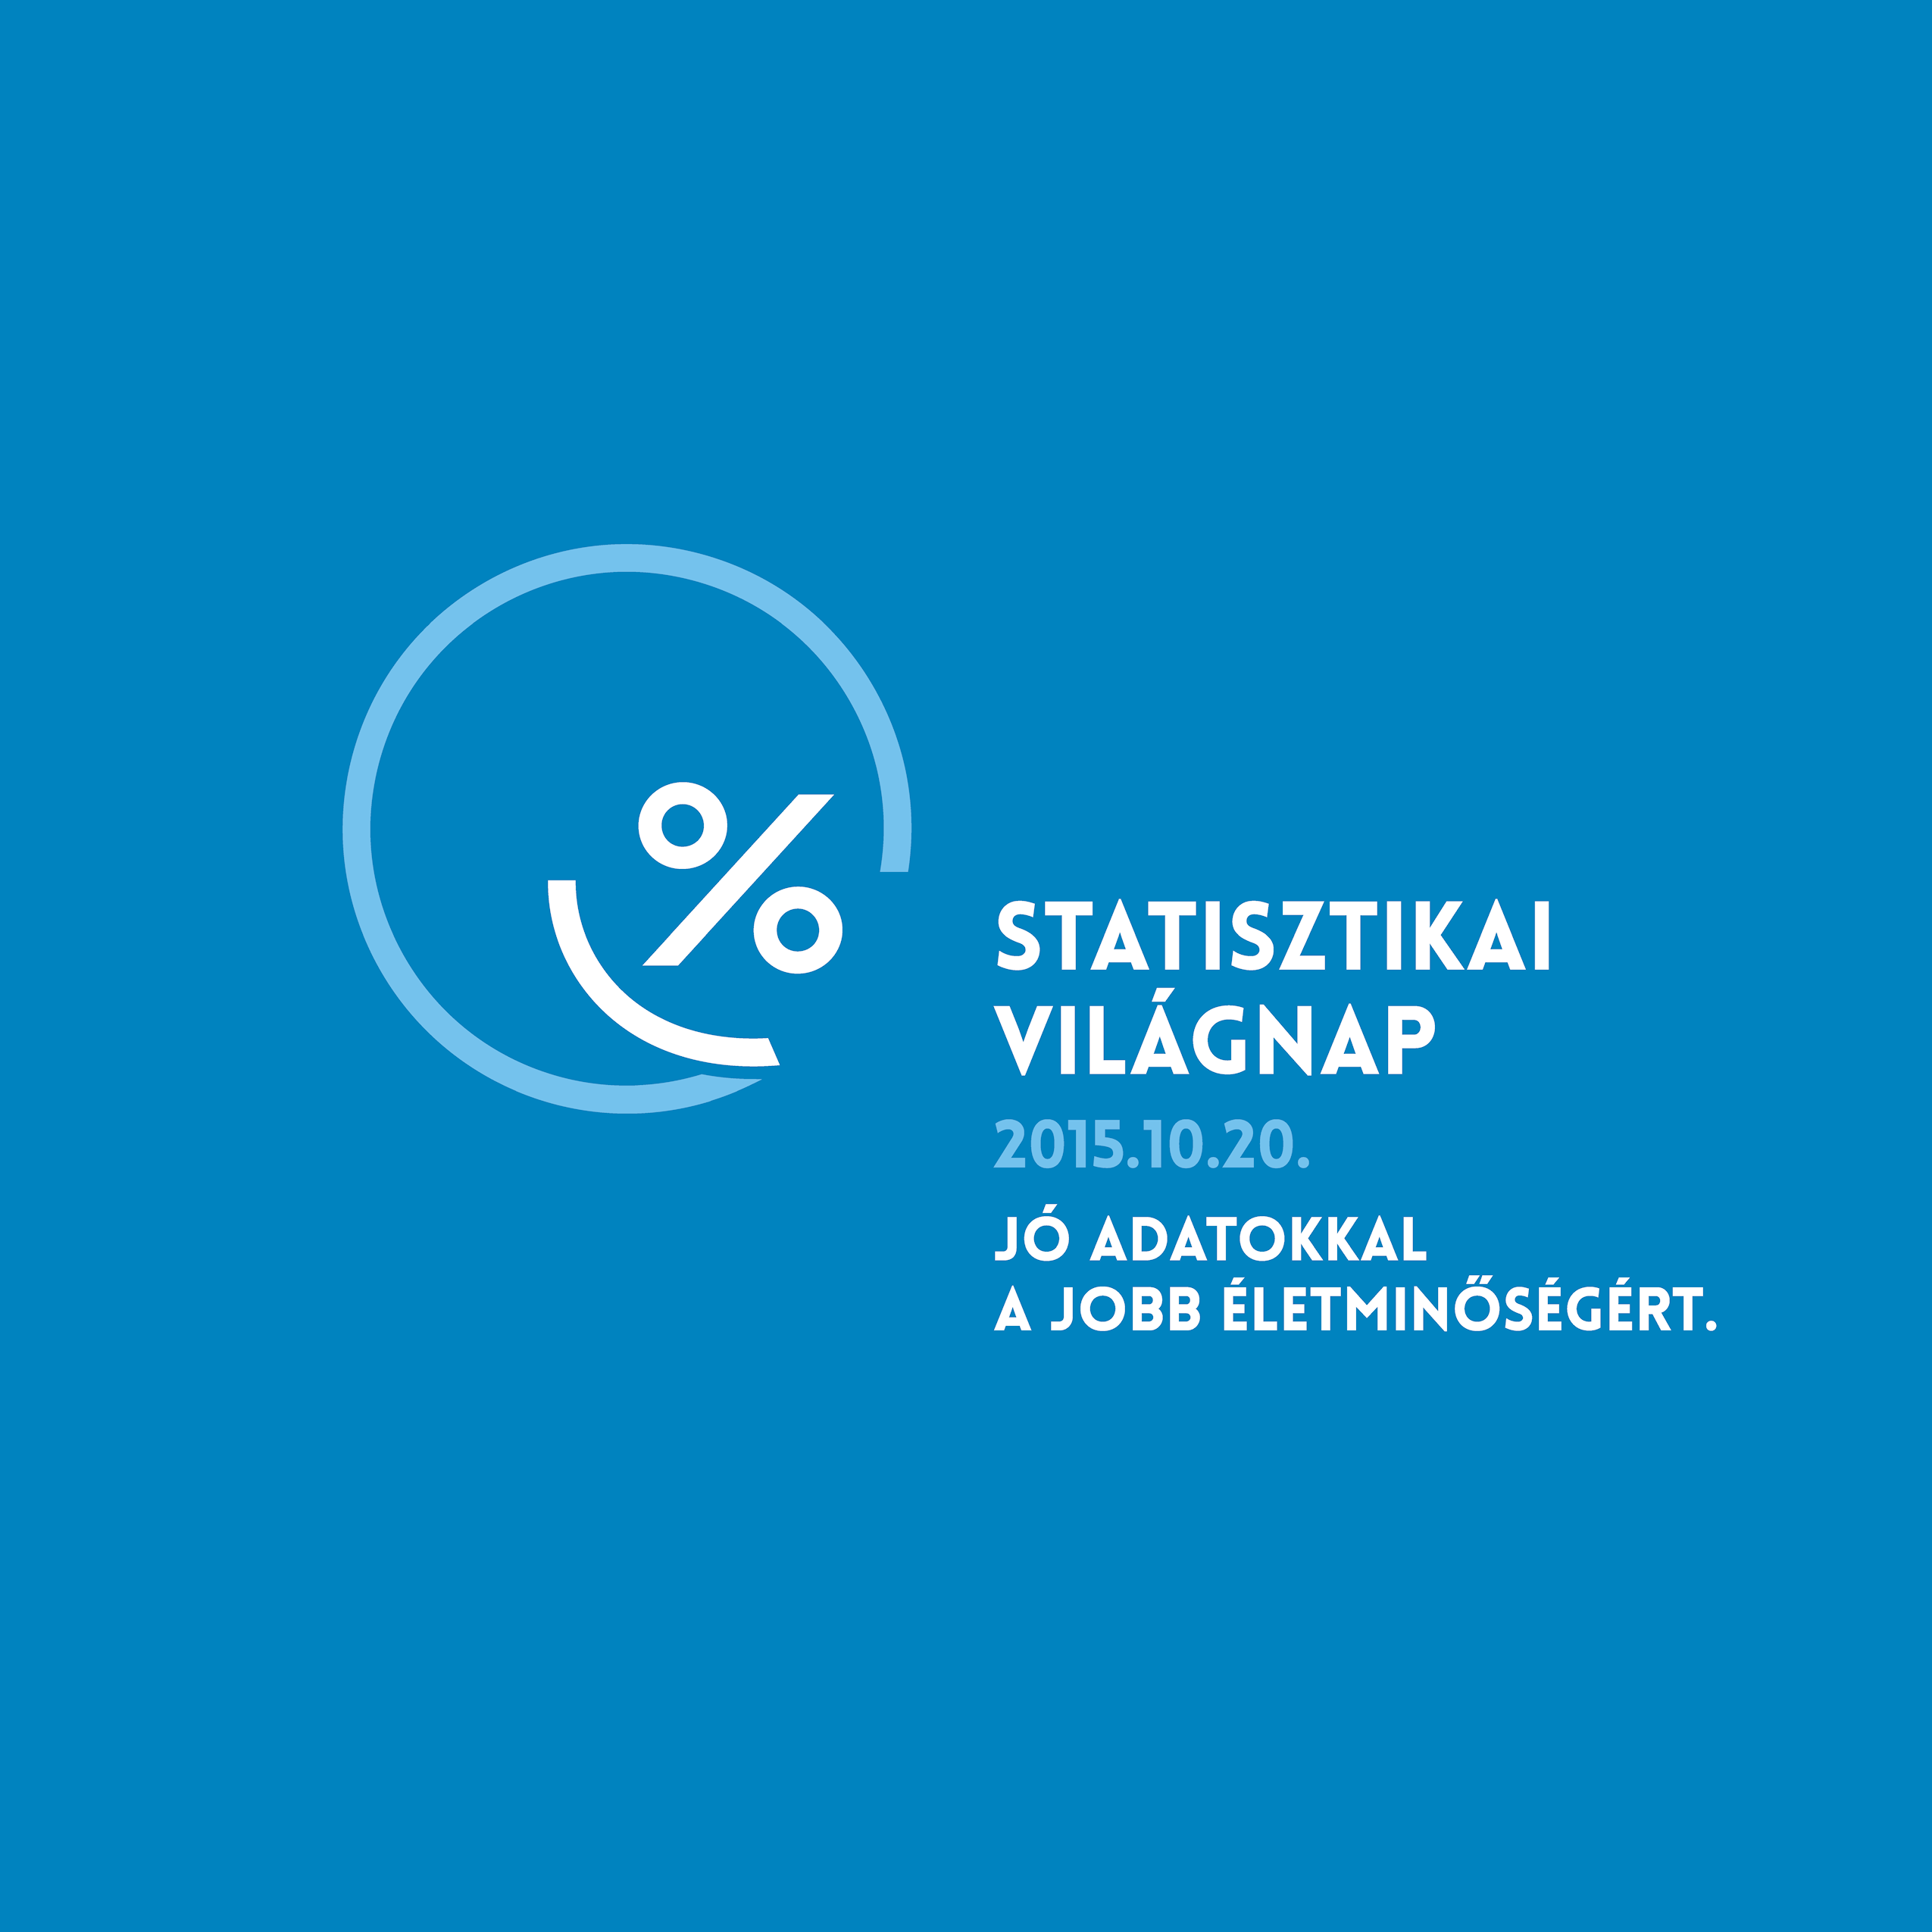 World Statistics Day Logo in Hungarian